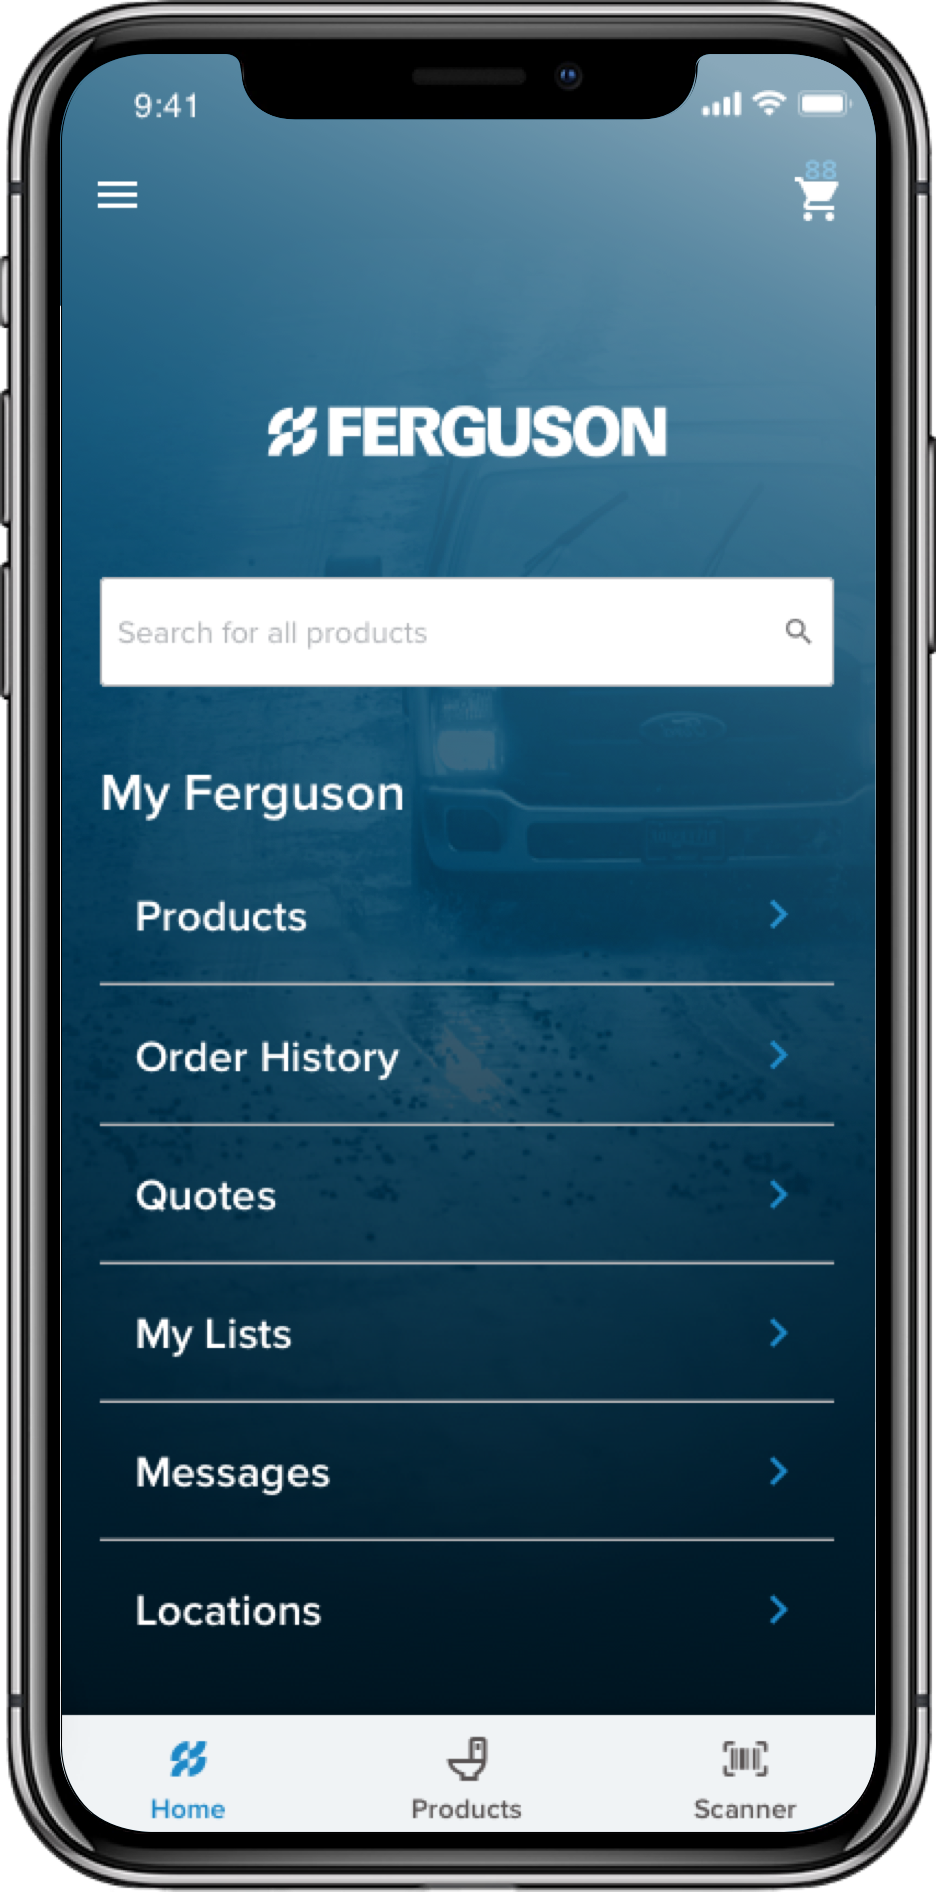 Ferguson app menu on a smartphone.